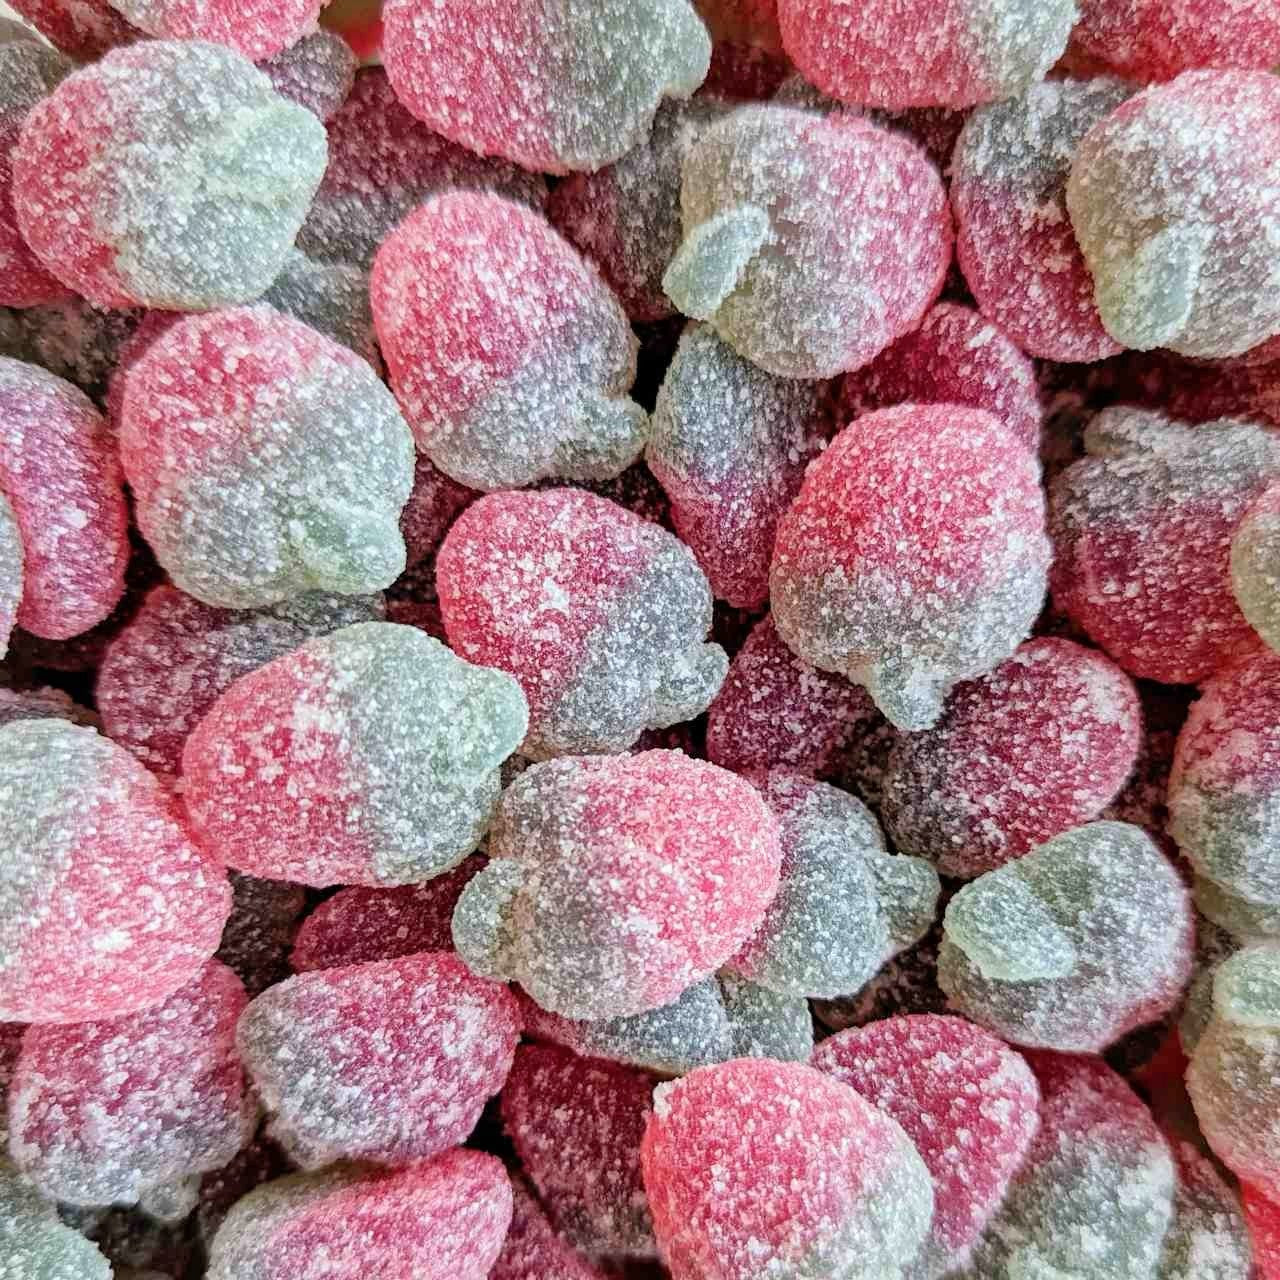 Jelly strawberry vegan sweets